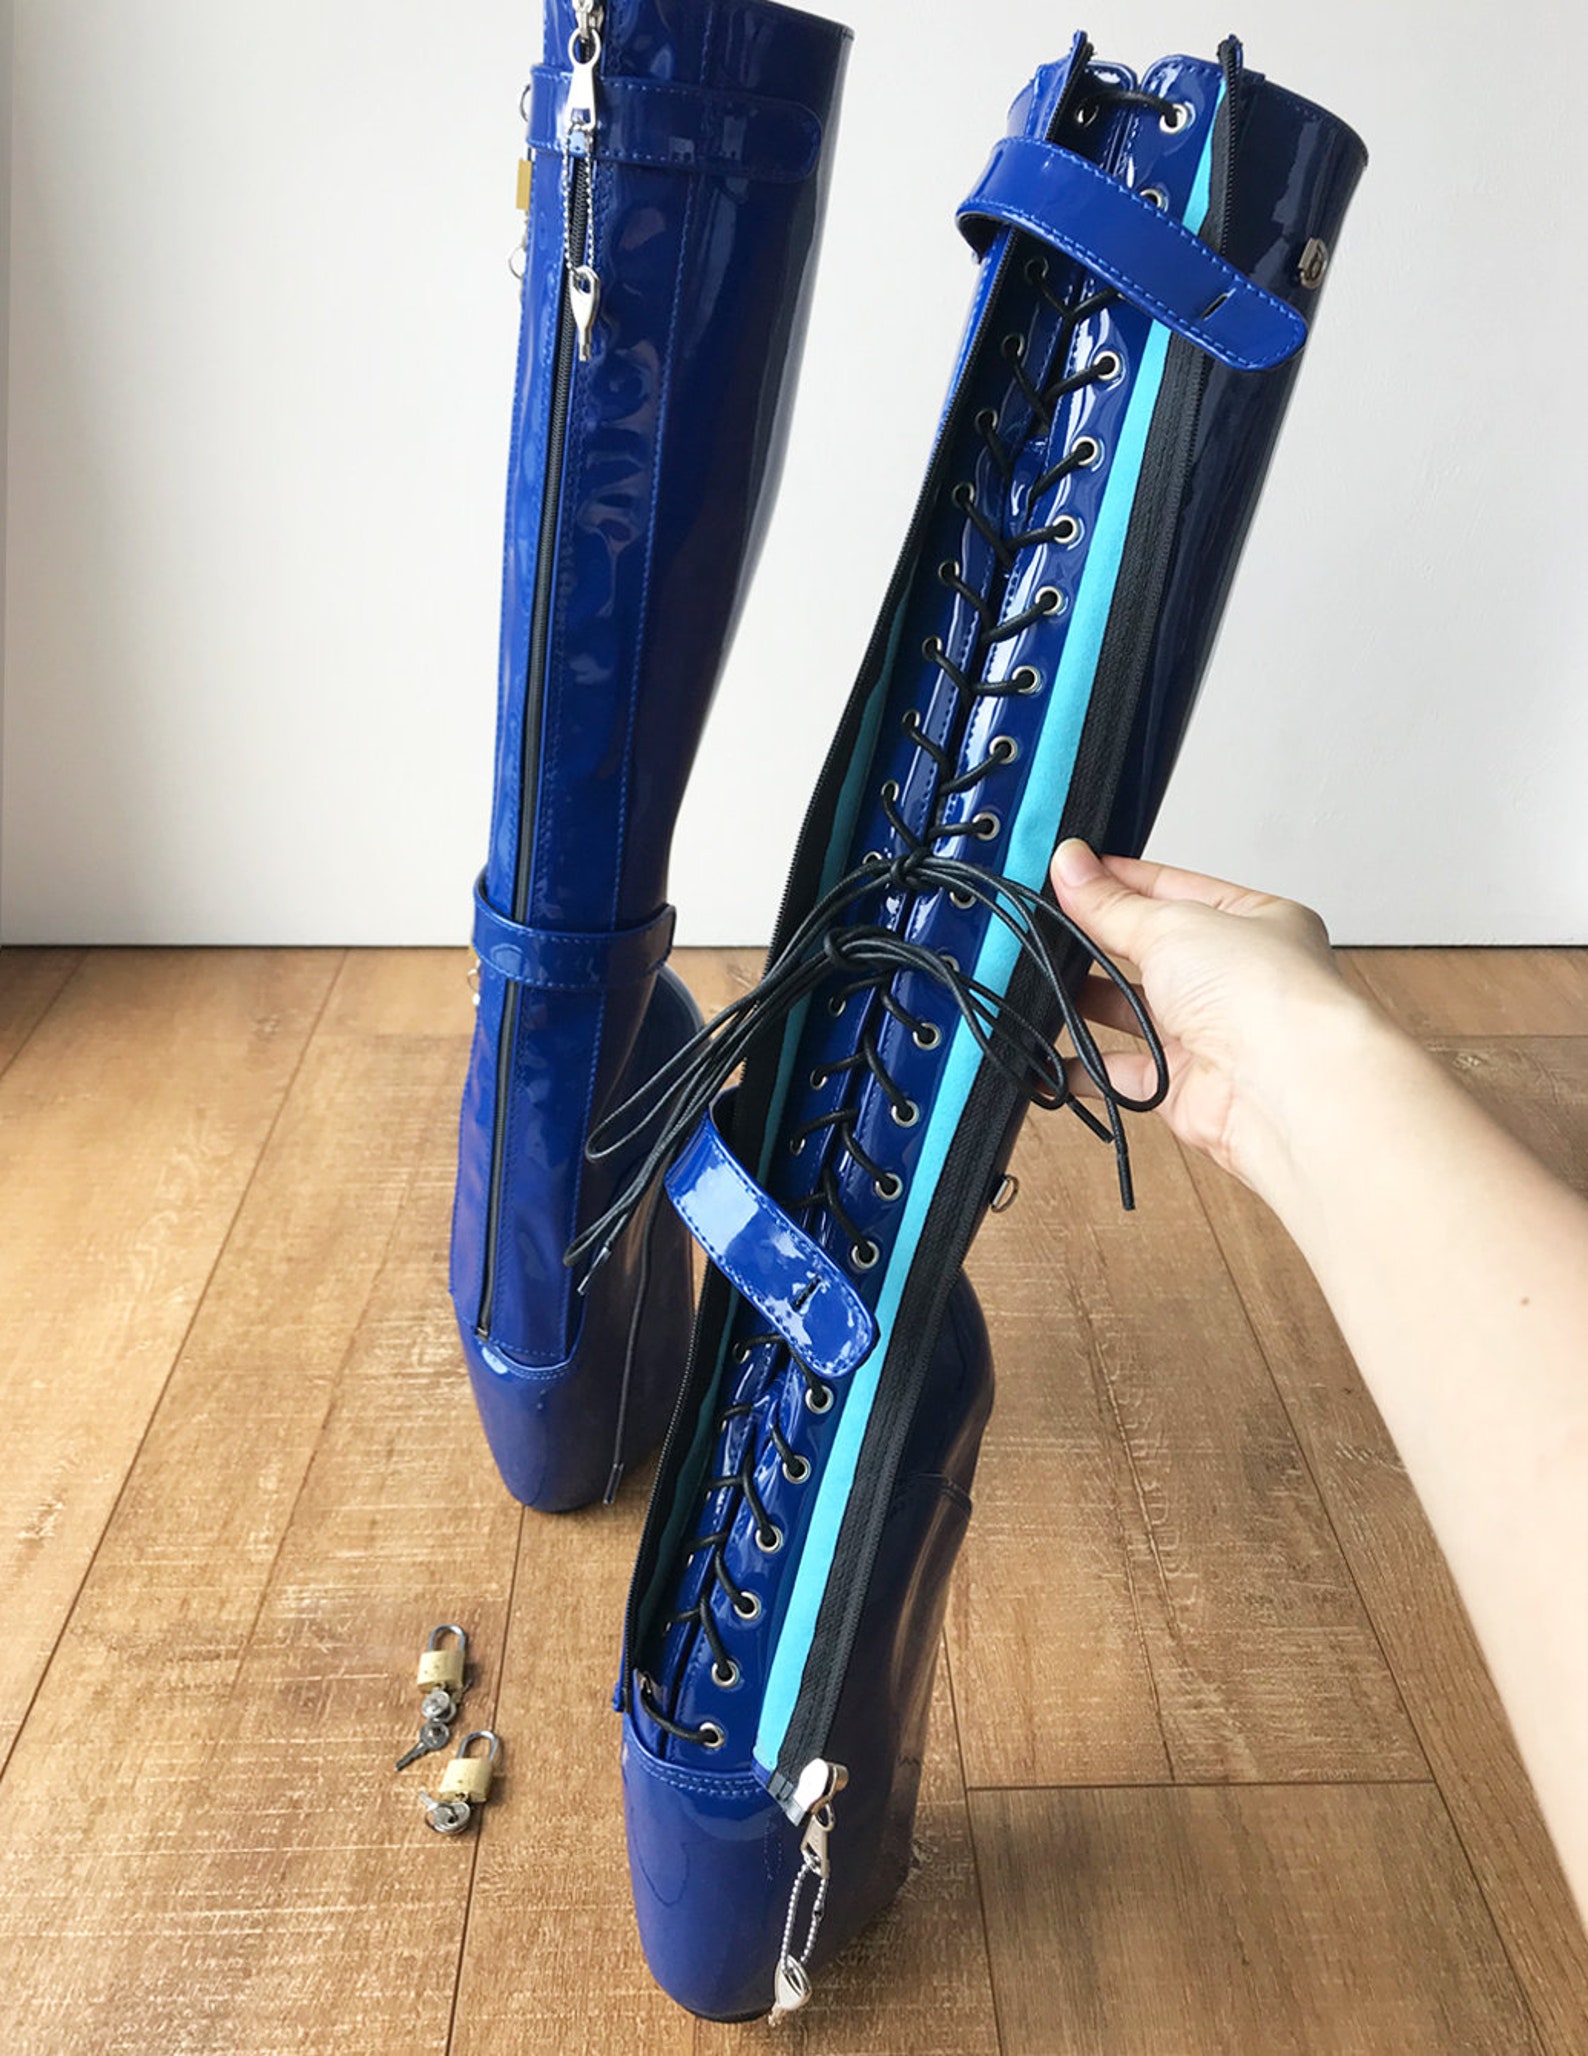 rtbu 6 keys locking zip beginner ballet wedge boots fetish dominatrix blue patent